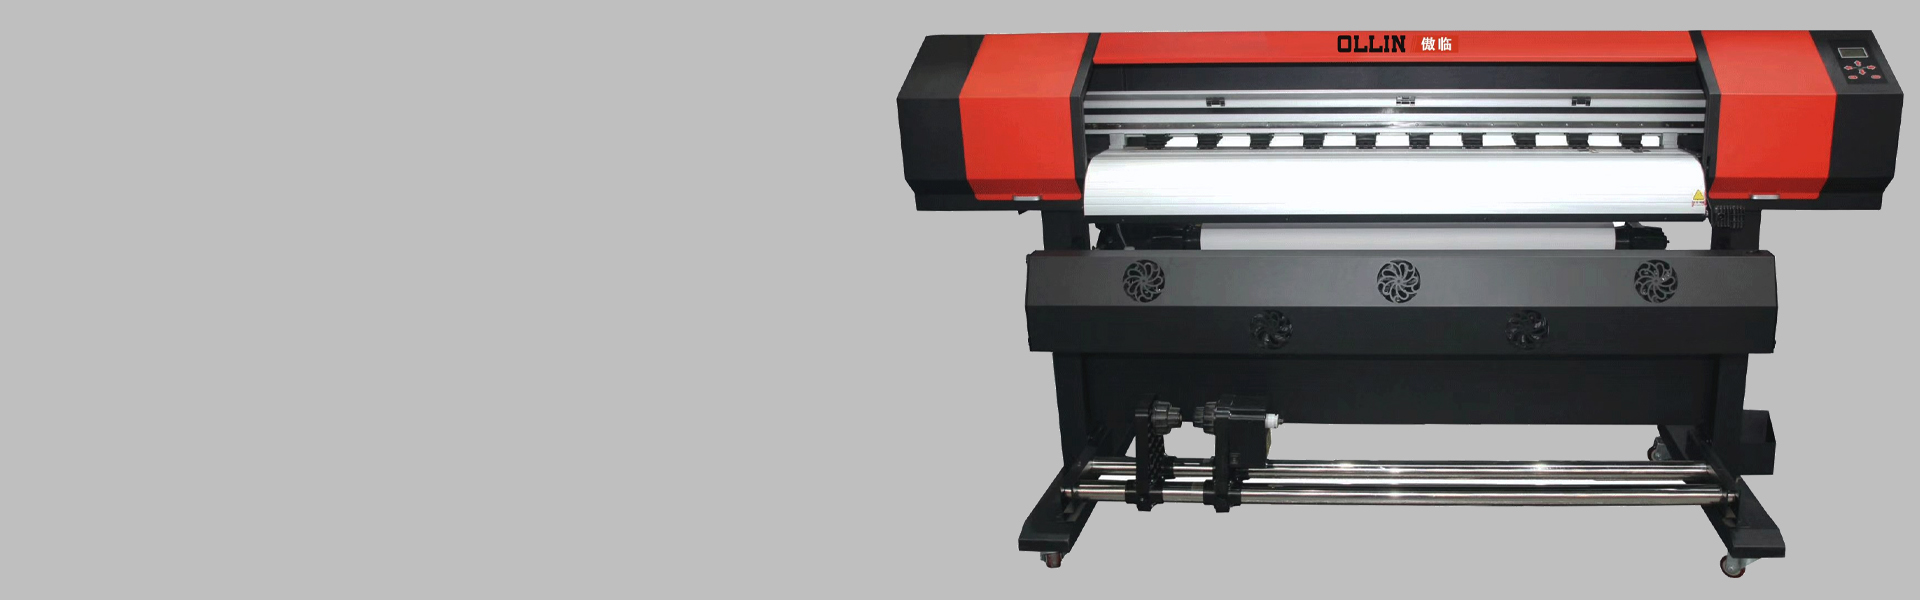 decal printer